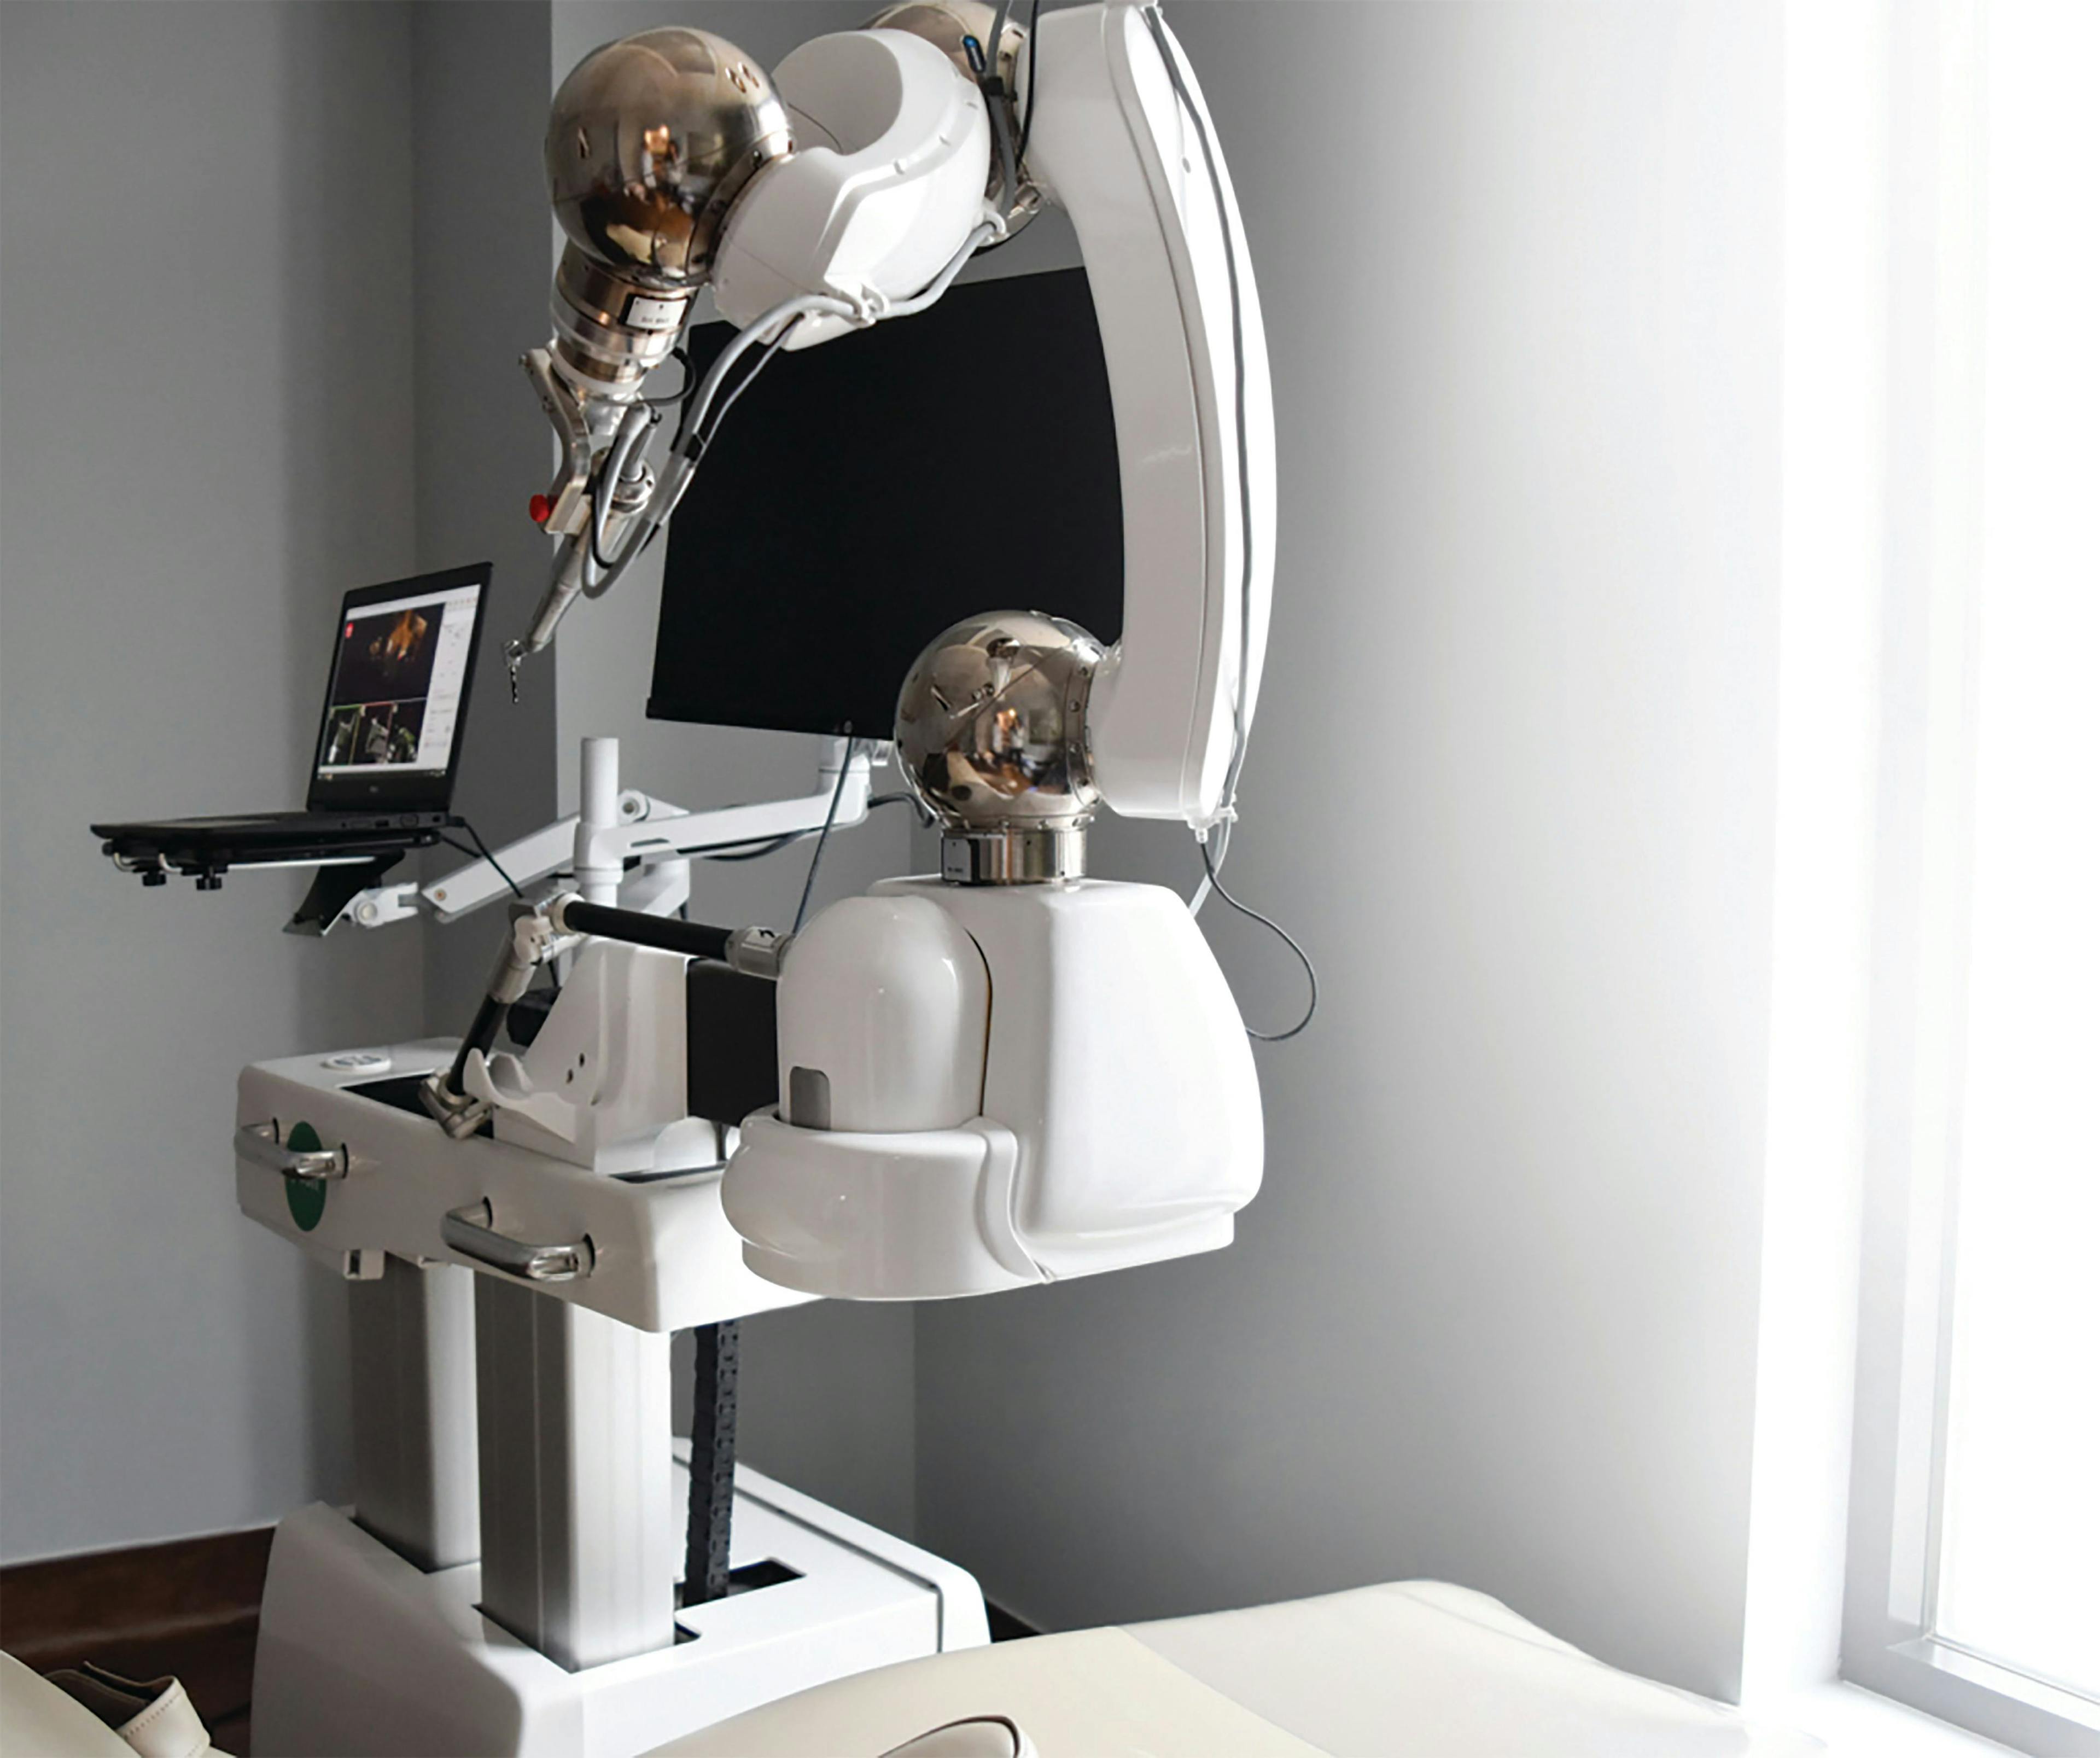 Neocis’ Yomi Dental Robotic System